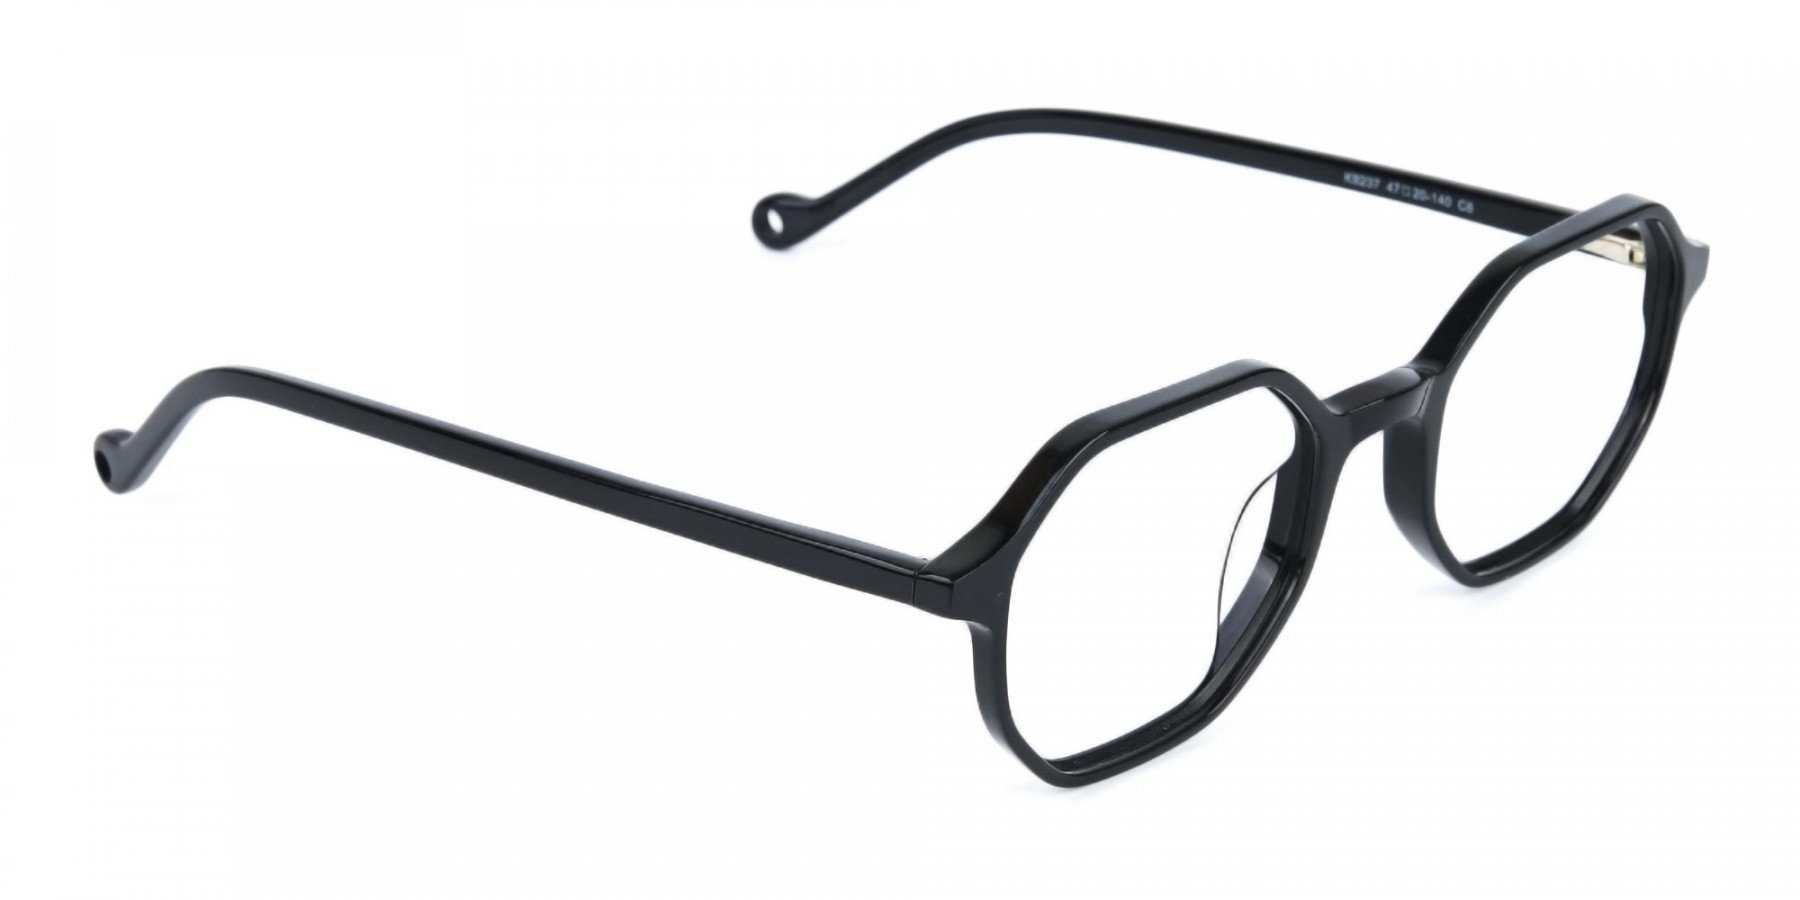 Octagonal Geometric Glasses in Black-1